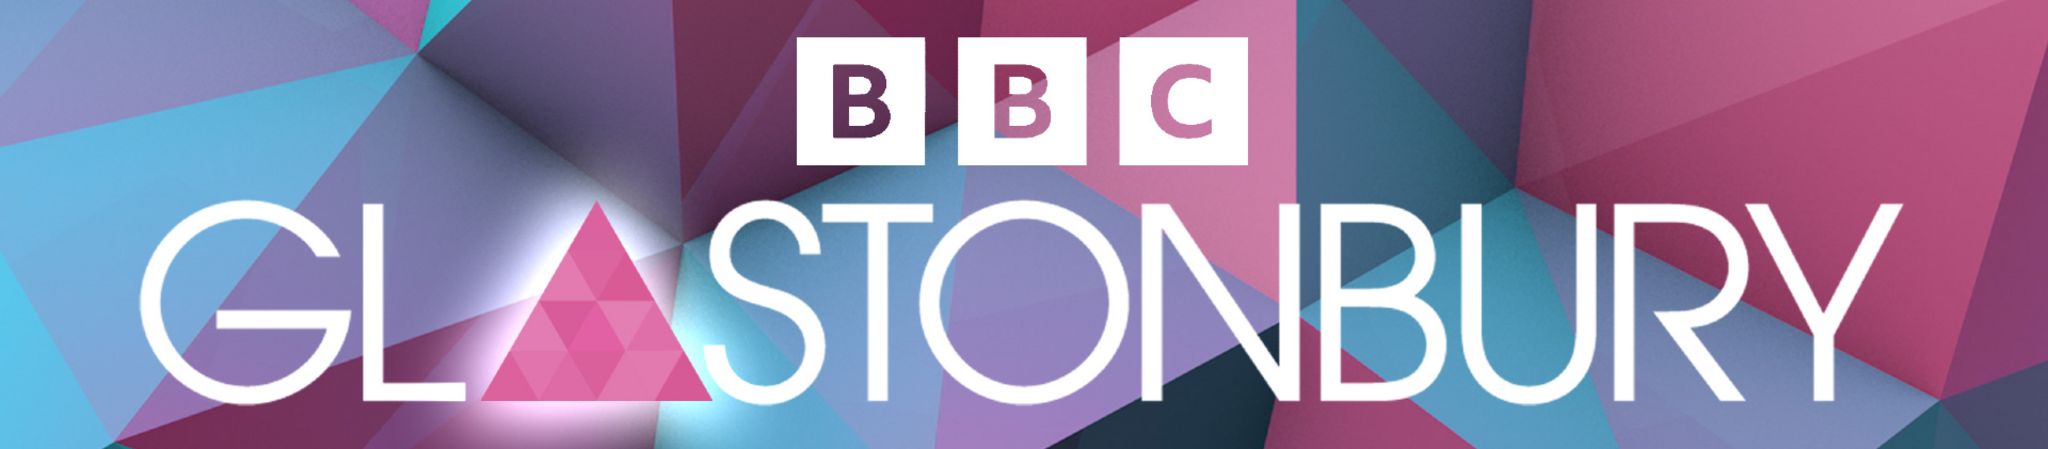 BBC Glastonbury graphic